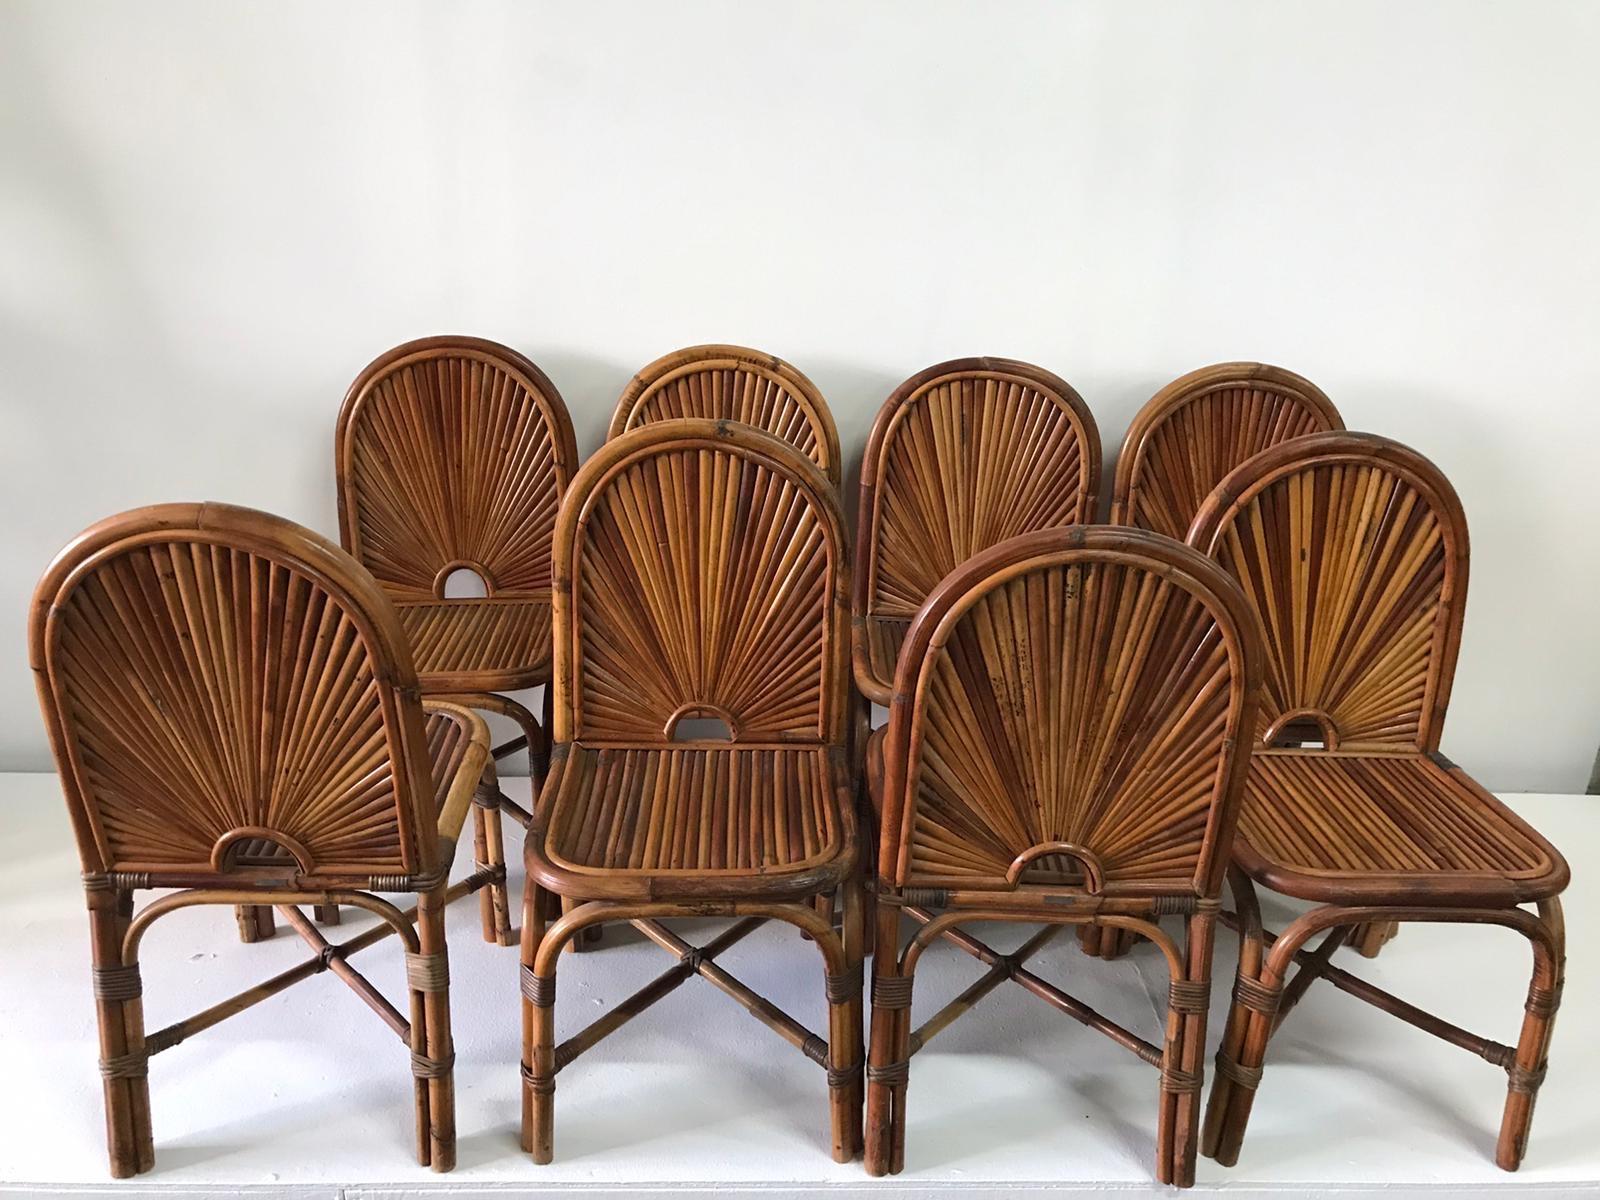 Gabriella Crespi Rising Sun Collection Rattan Chairs, Set of 8 2